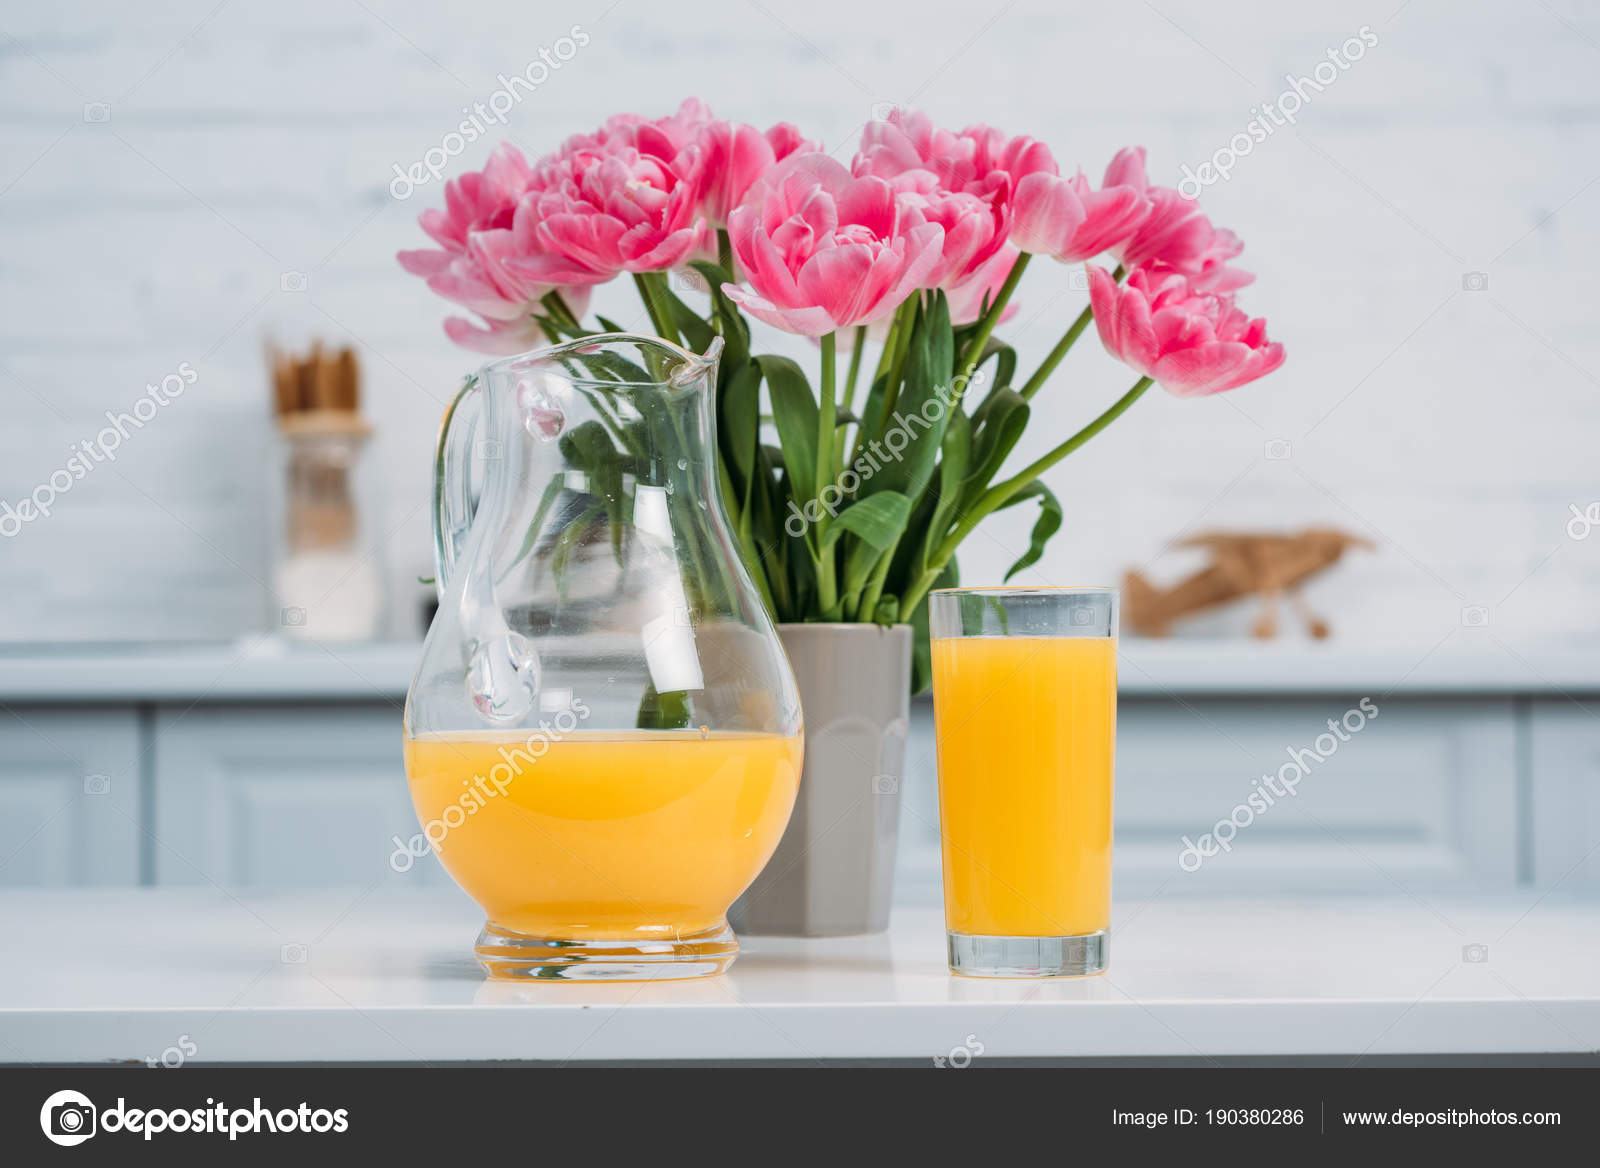 https://st3.depositphotos.com/12985848/19038/i/1600/depositphotos_190380286-stock-photo-front-view-orange-juice-vase.jpg